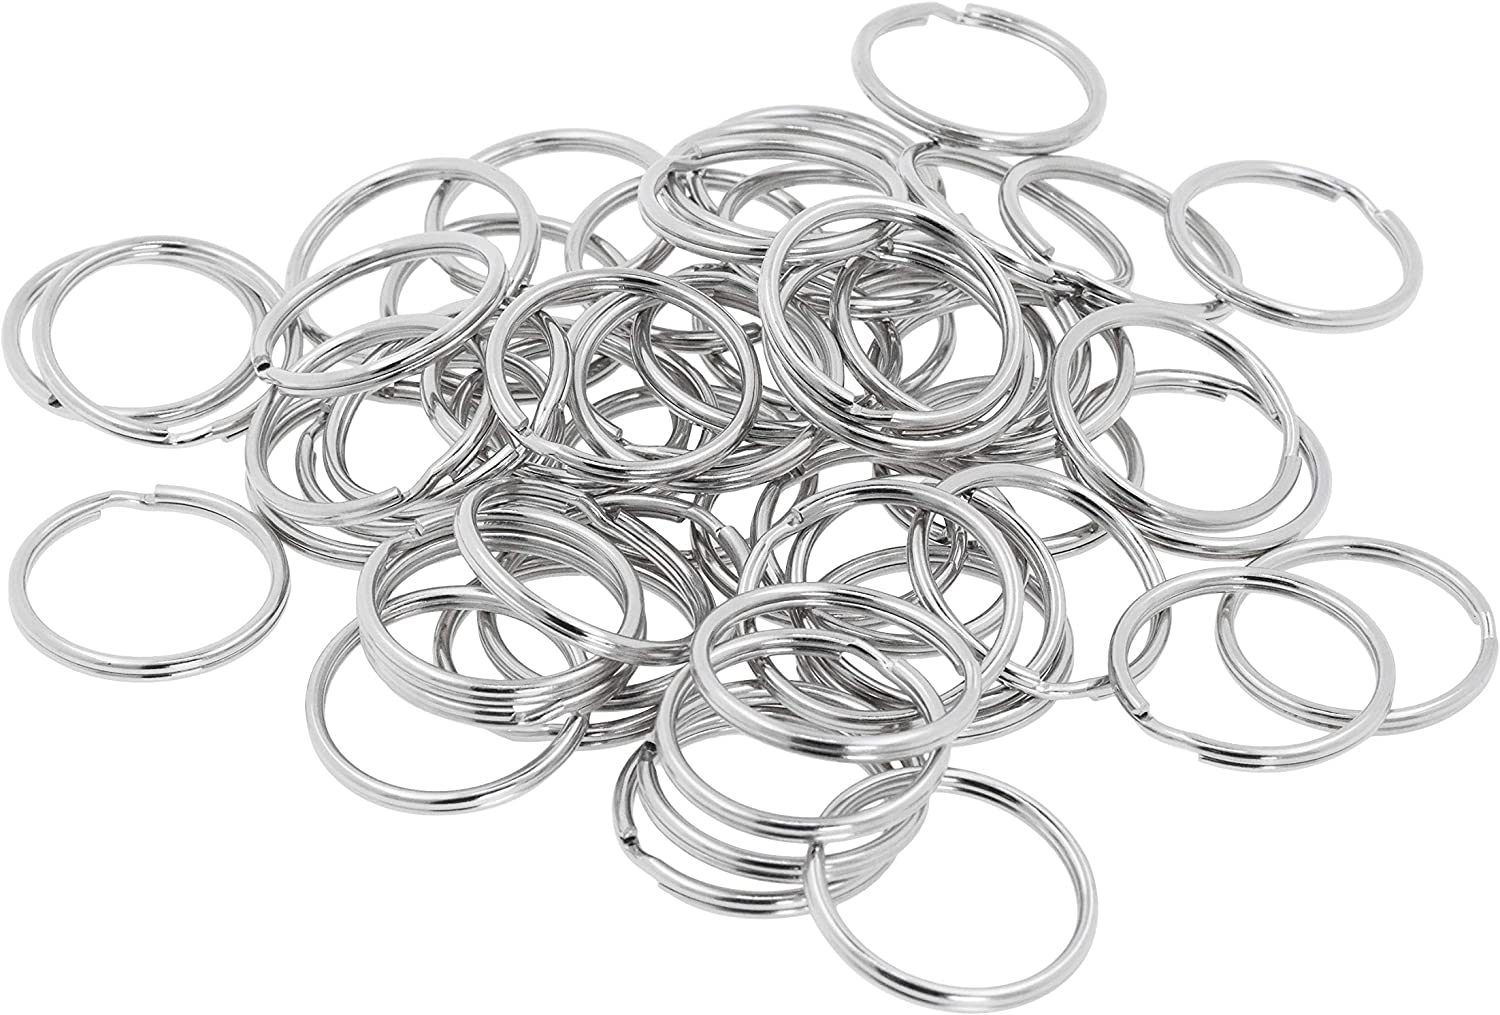 Mandala Crafts Large Metal Split Key Rings for Crafts, Keys, Keychains, 100 Pieces